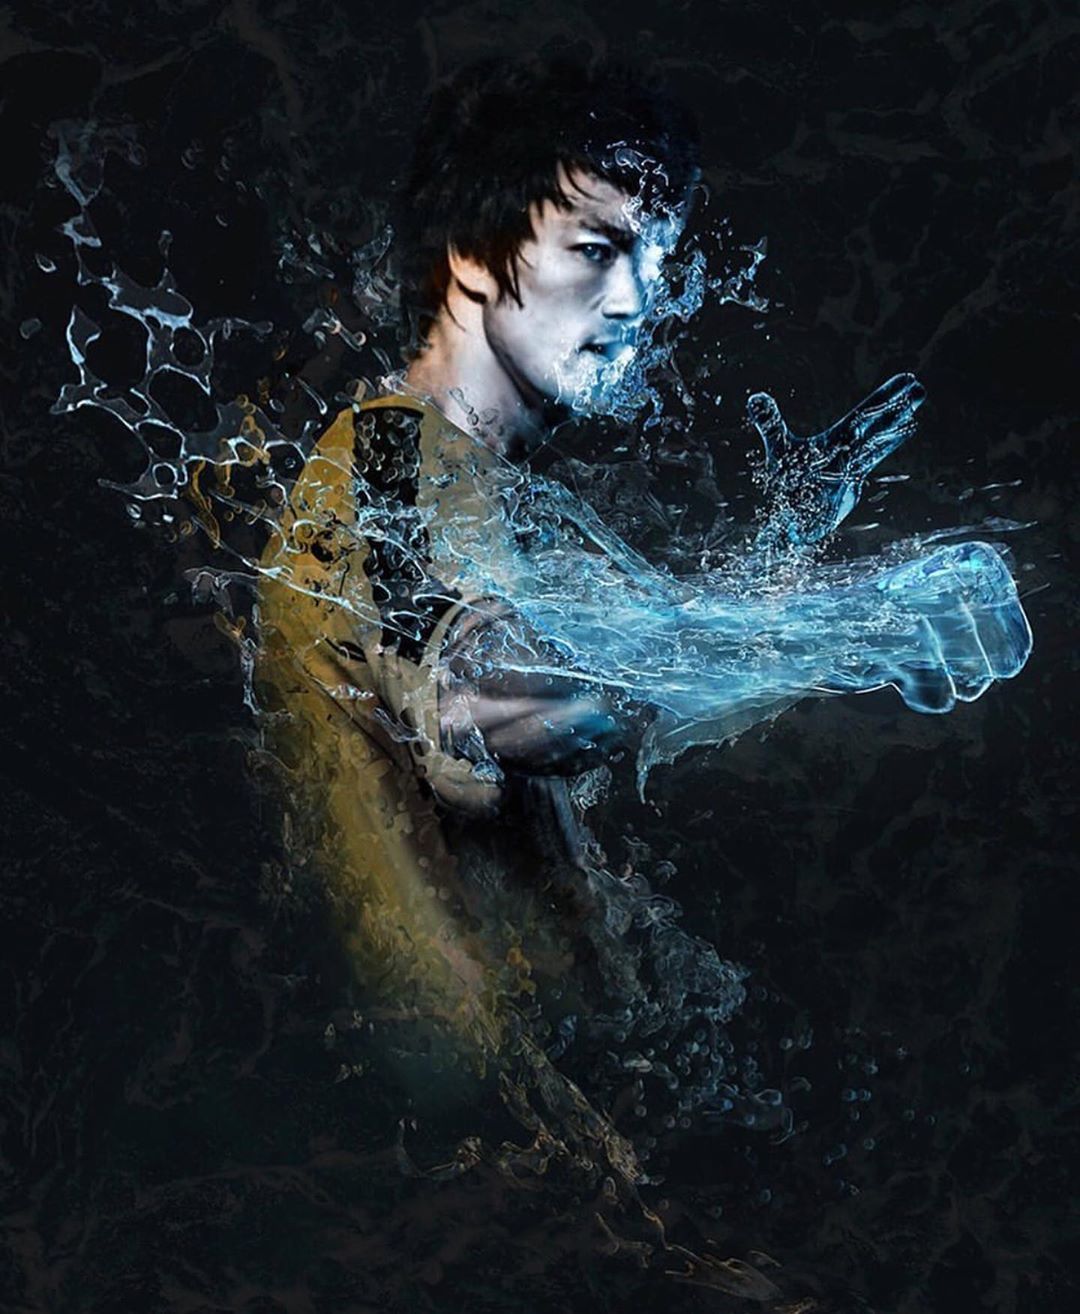 Wing Chun Origins on Instagram Amazing artwork by bosslogic